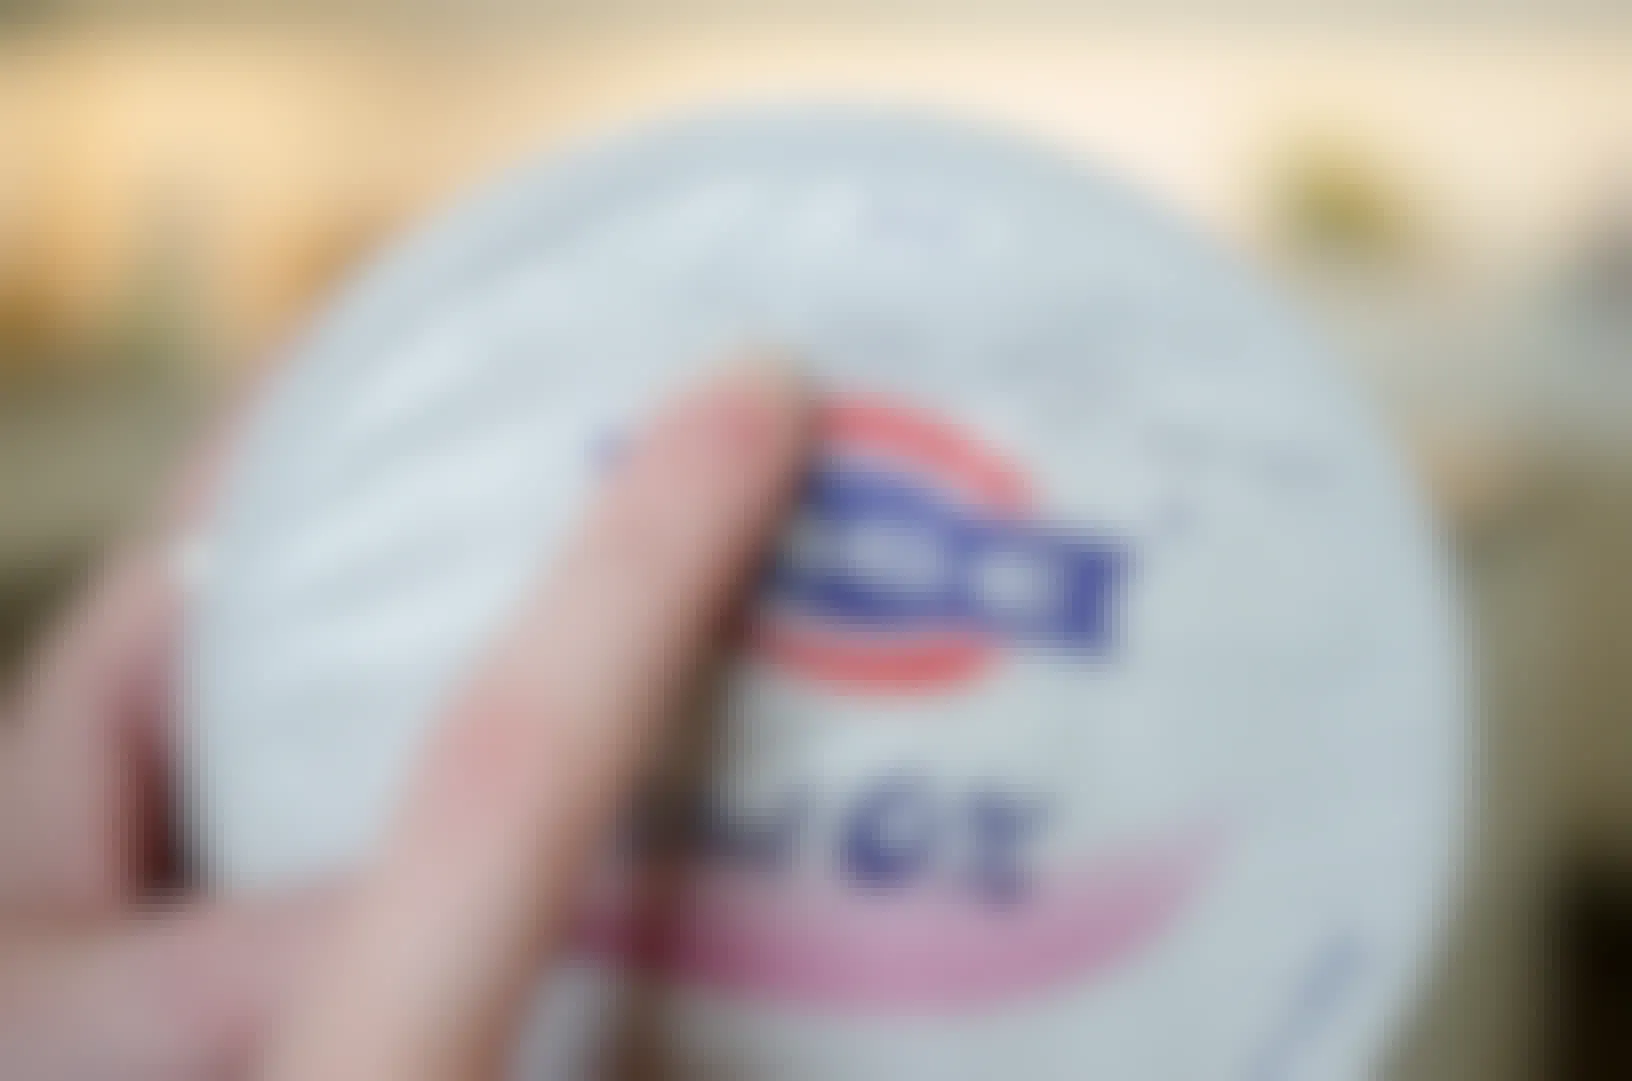 Fage Total greek yogurt expiration date finger pointing